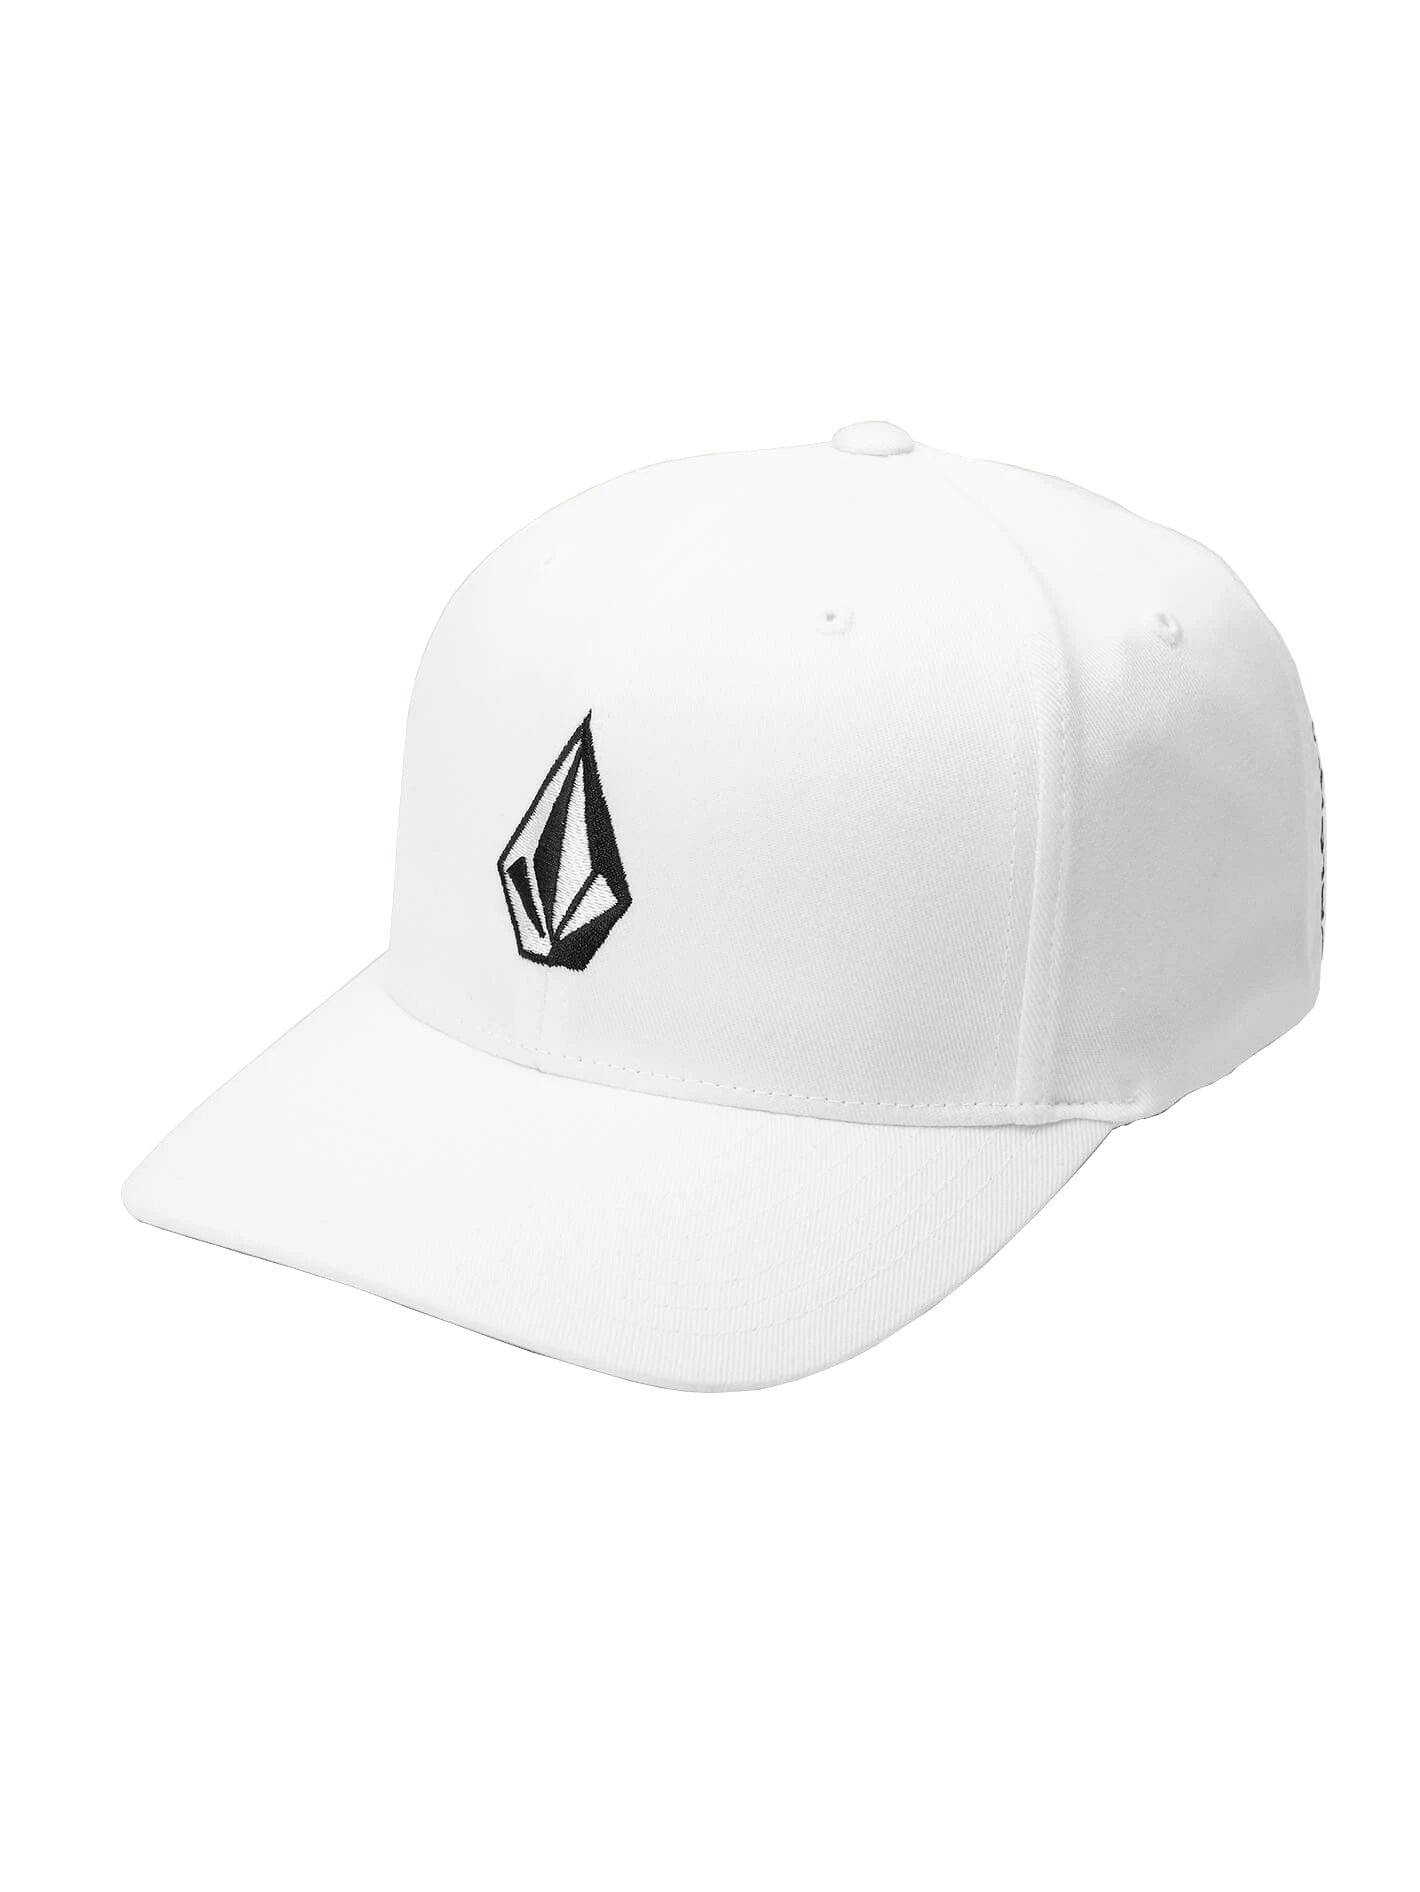 Volcom Full Stone X-Fit Mens Hat WHT-White L/XL